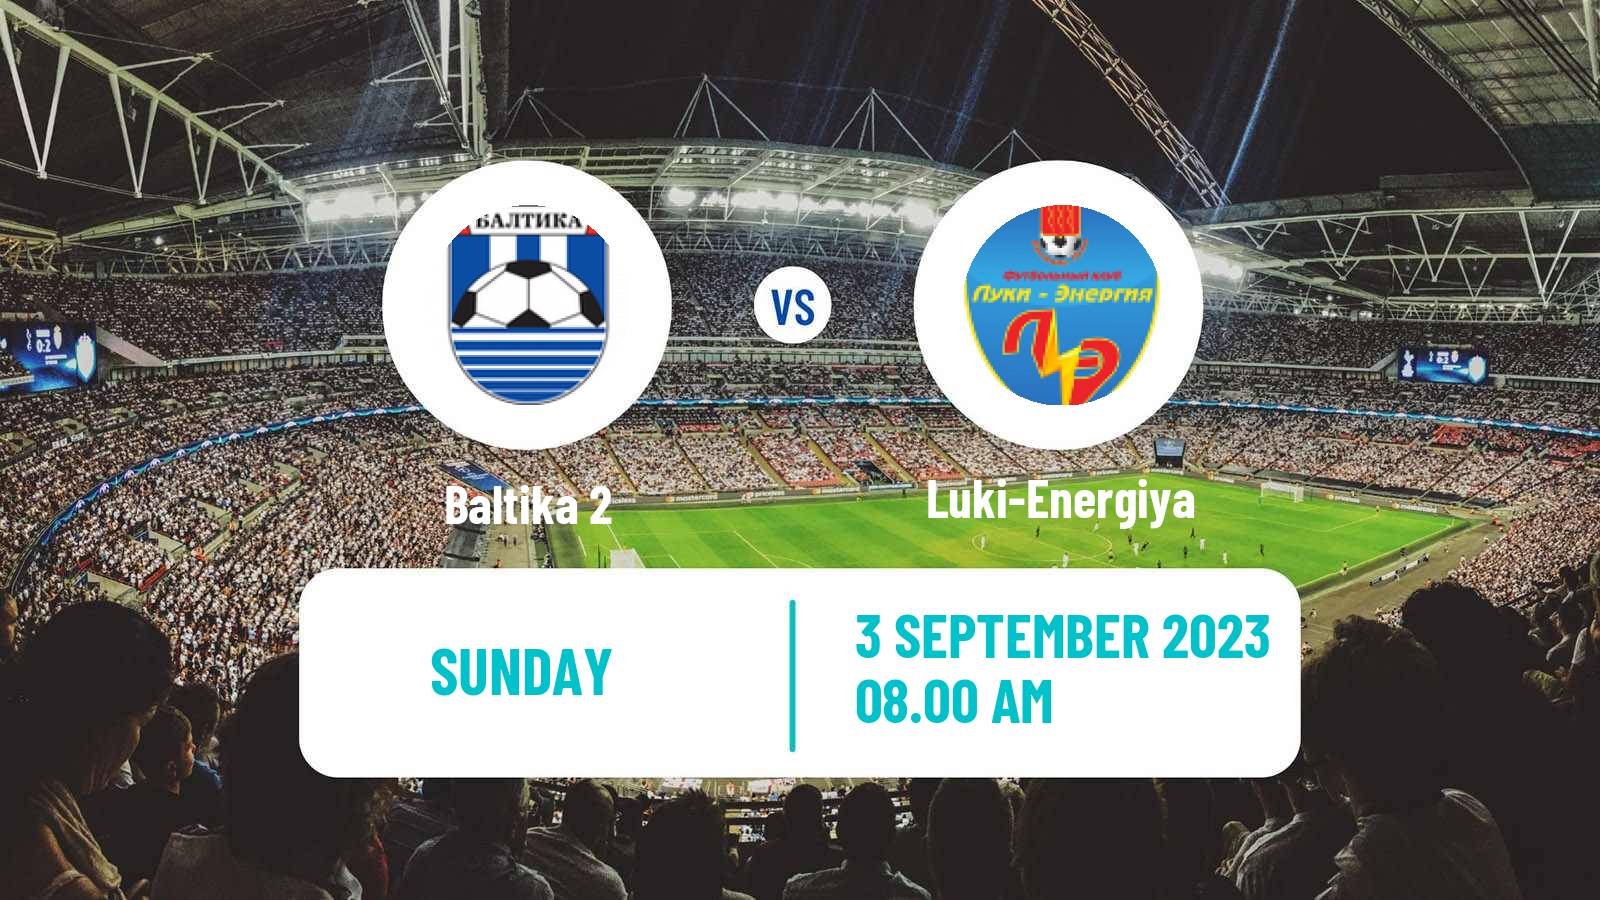 Soccer FNL 2 Division B Group 2 Baltika 2 - Luki-Energiya